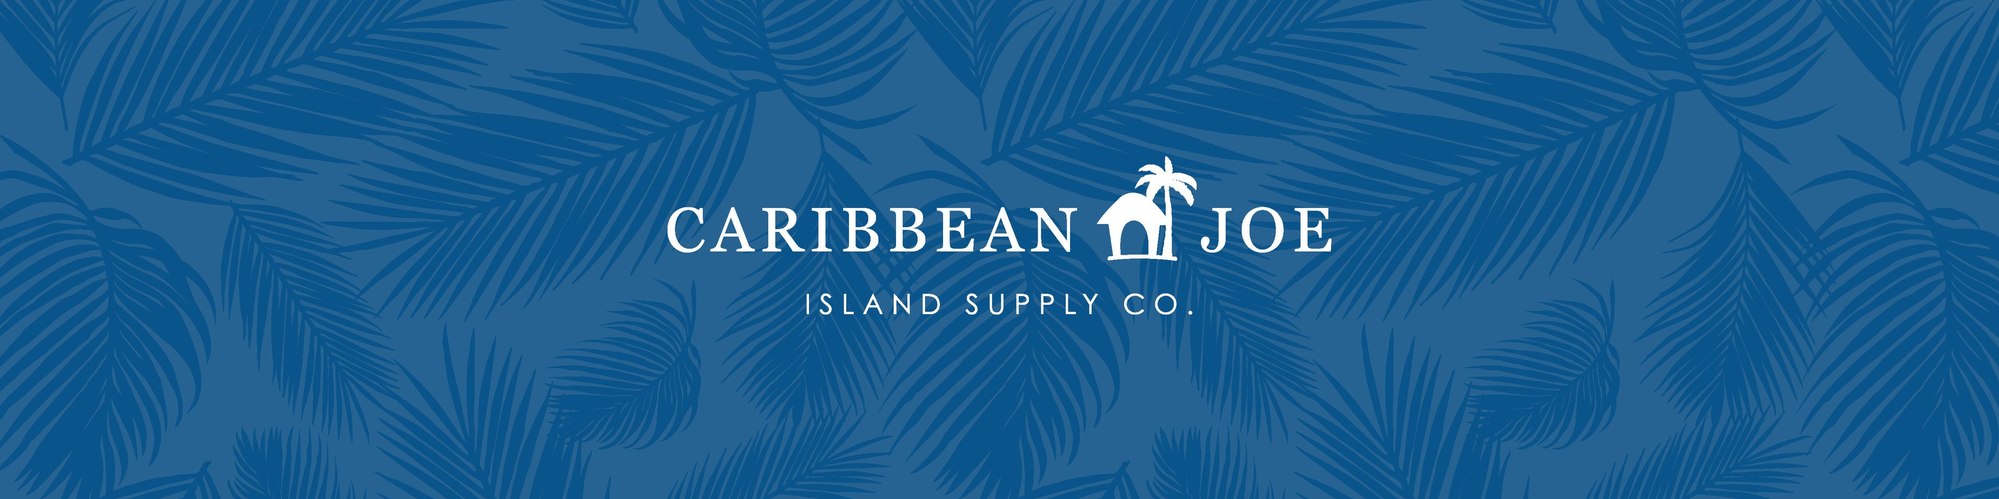 Caribbean Joe Rebranding